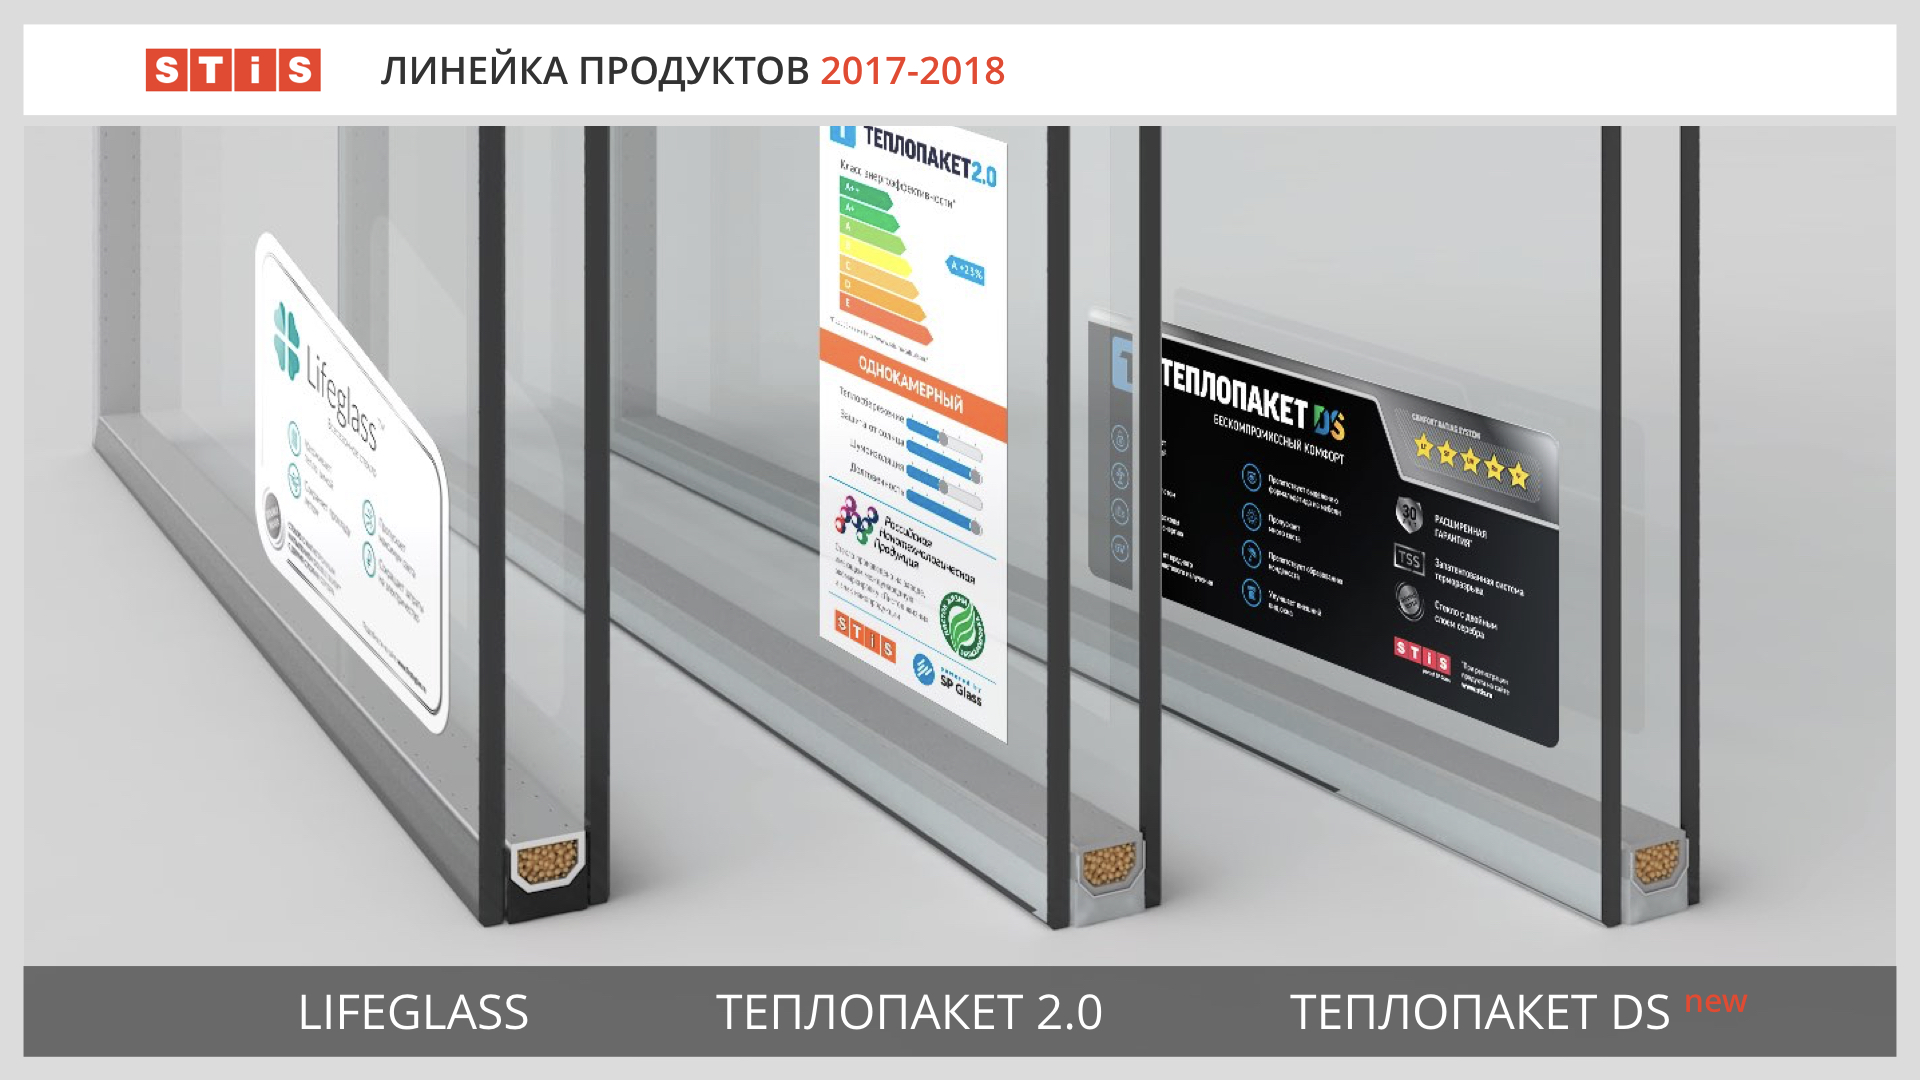 fОбновлённую линейку стеклопакетов STiS представили в Волгограде 